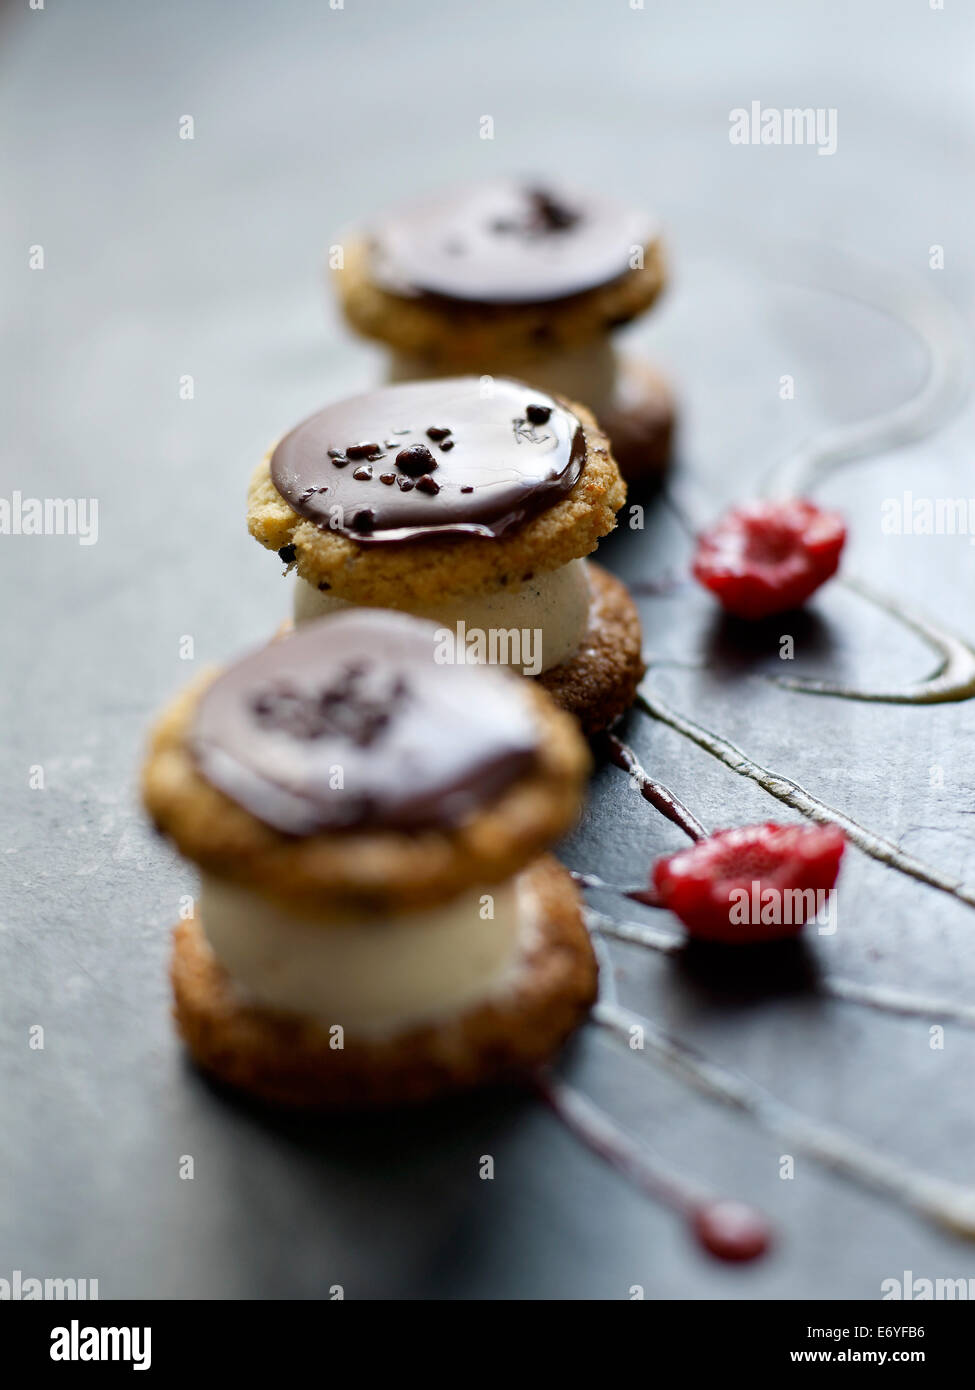 Profiterole-style chocolate cookie et sa glace vanille dessert Banque D'Images